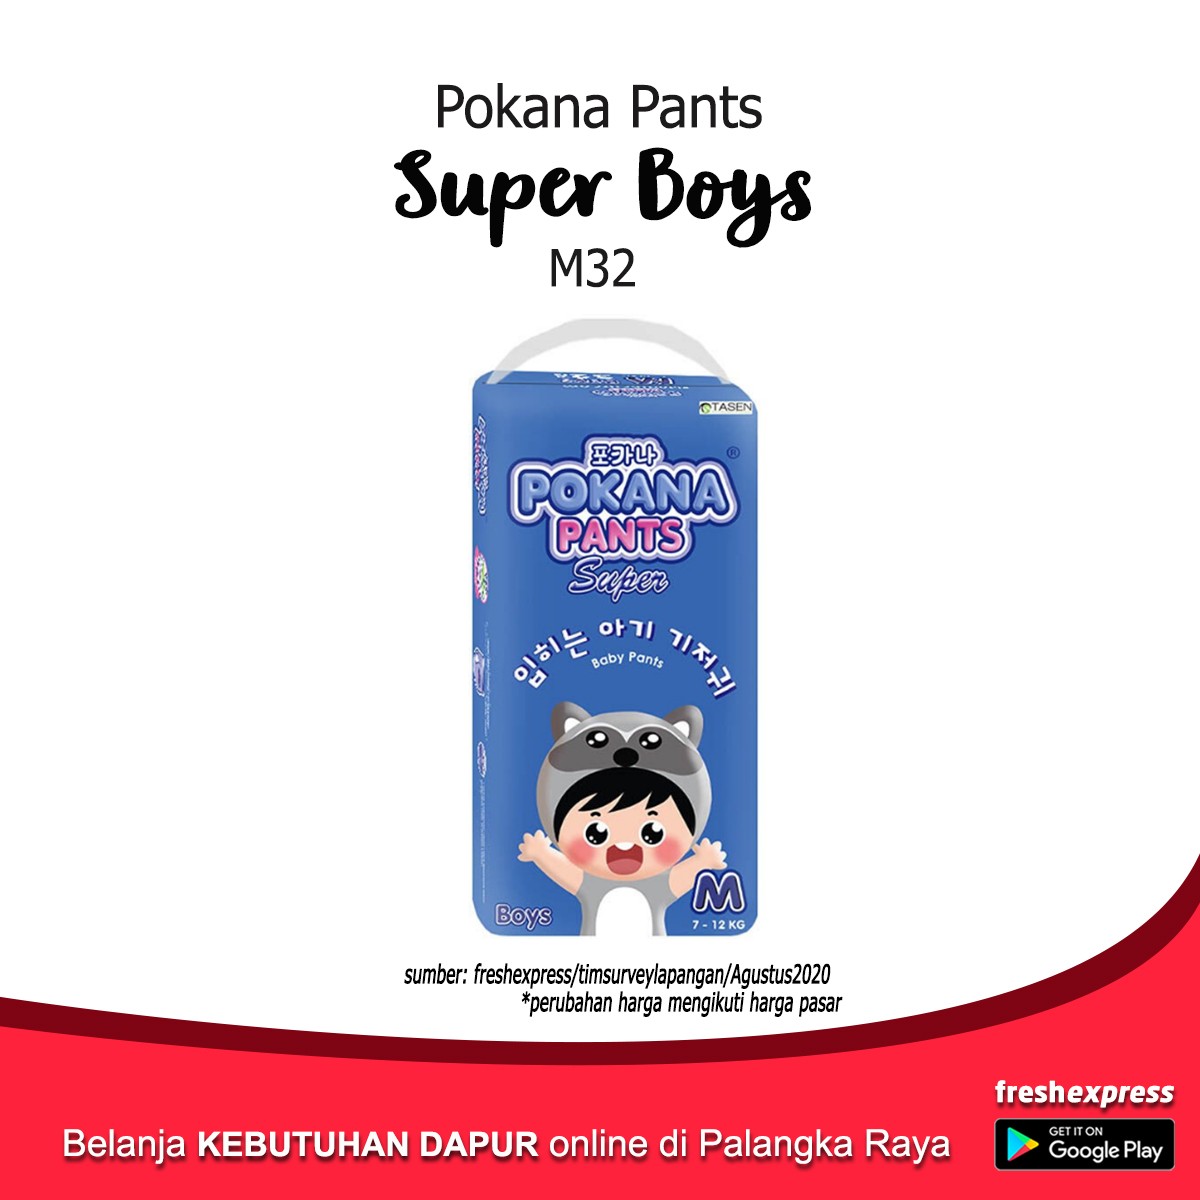 Pokana Pants Super Boys M32